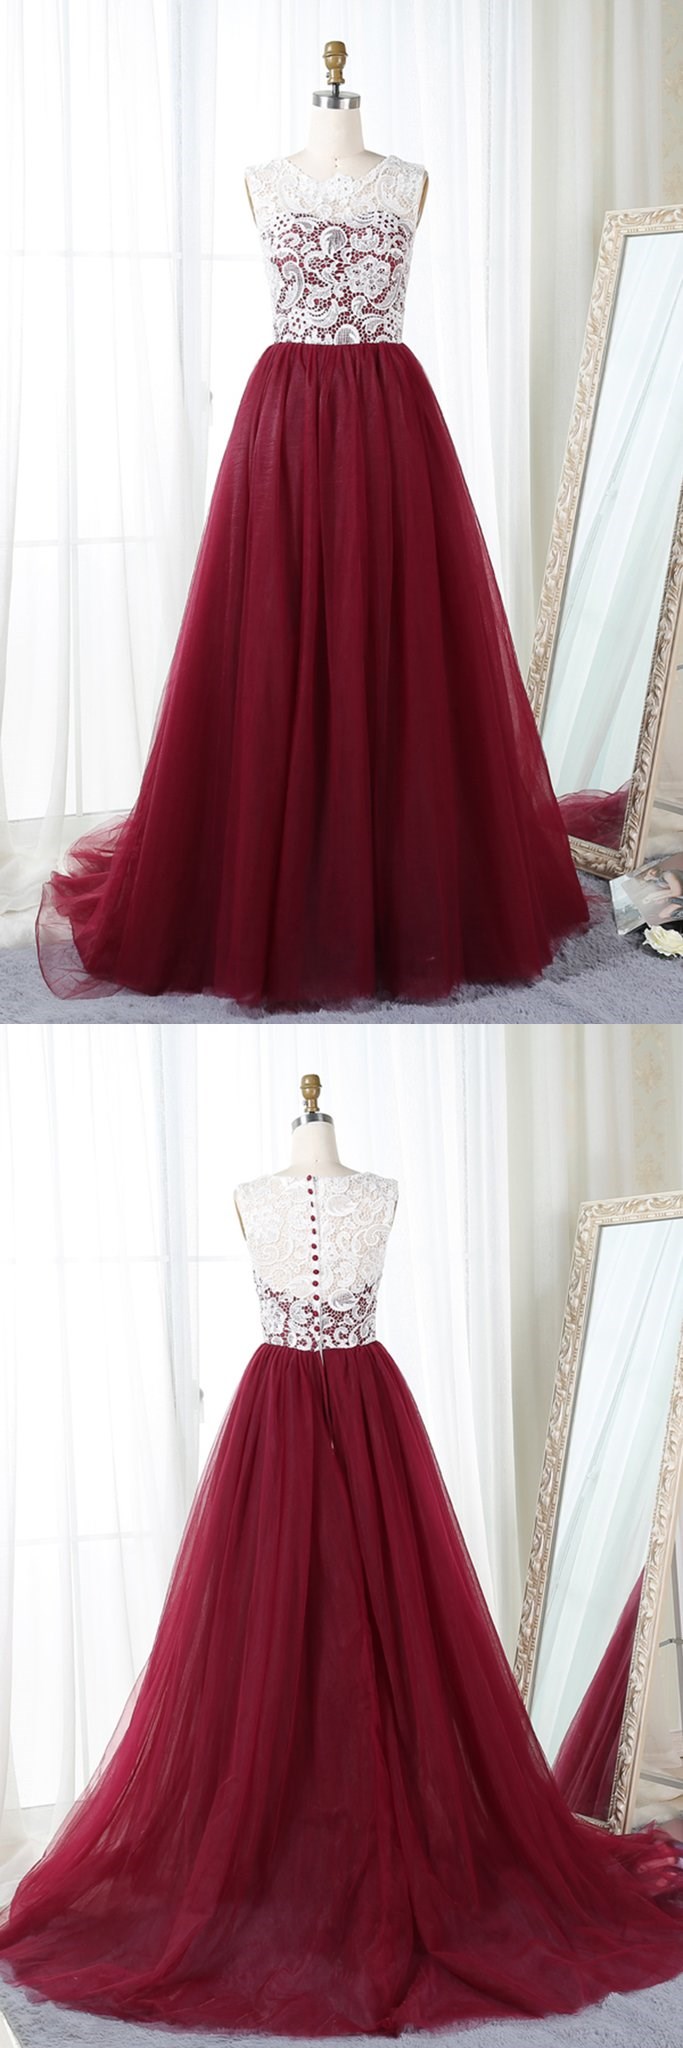 Unique Burgundy Tulle Long A-line Evening Dress, Long Winter Formal Prom Dress